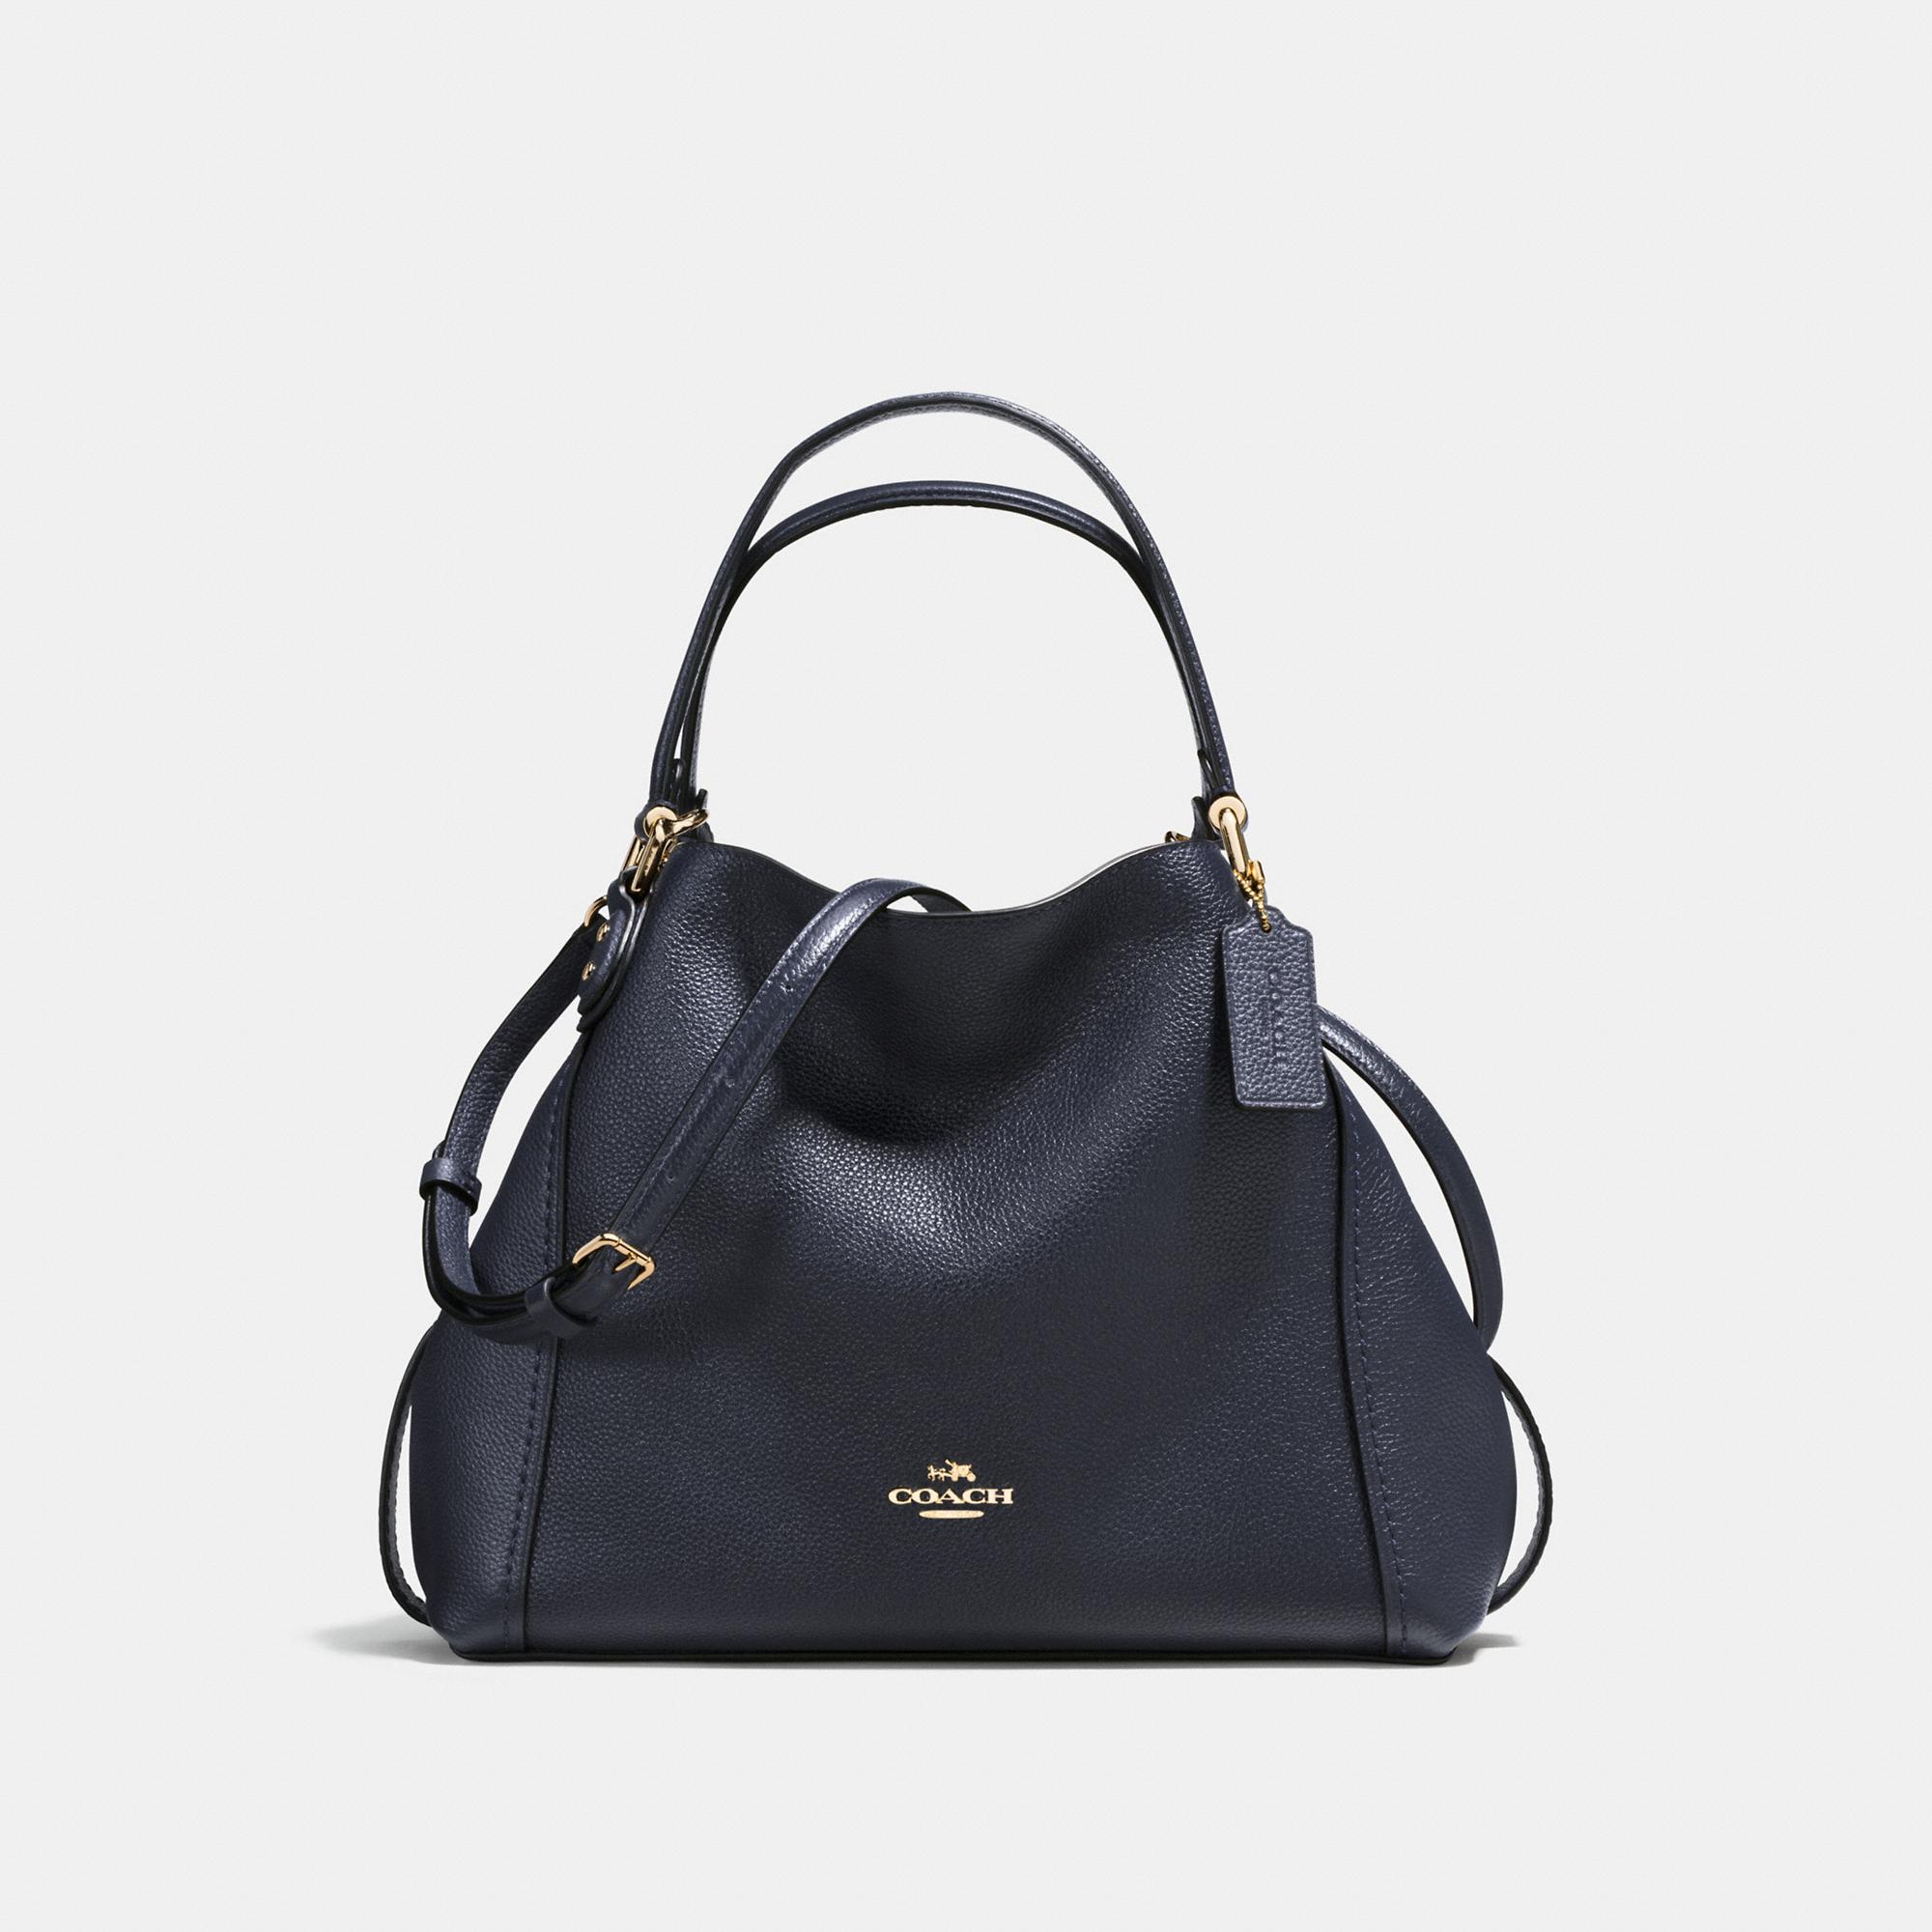 COACH Edie 28 Shoulder Bag In Black Calfskin in Blue - Lyst